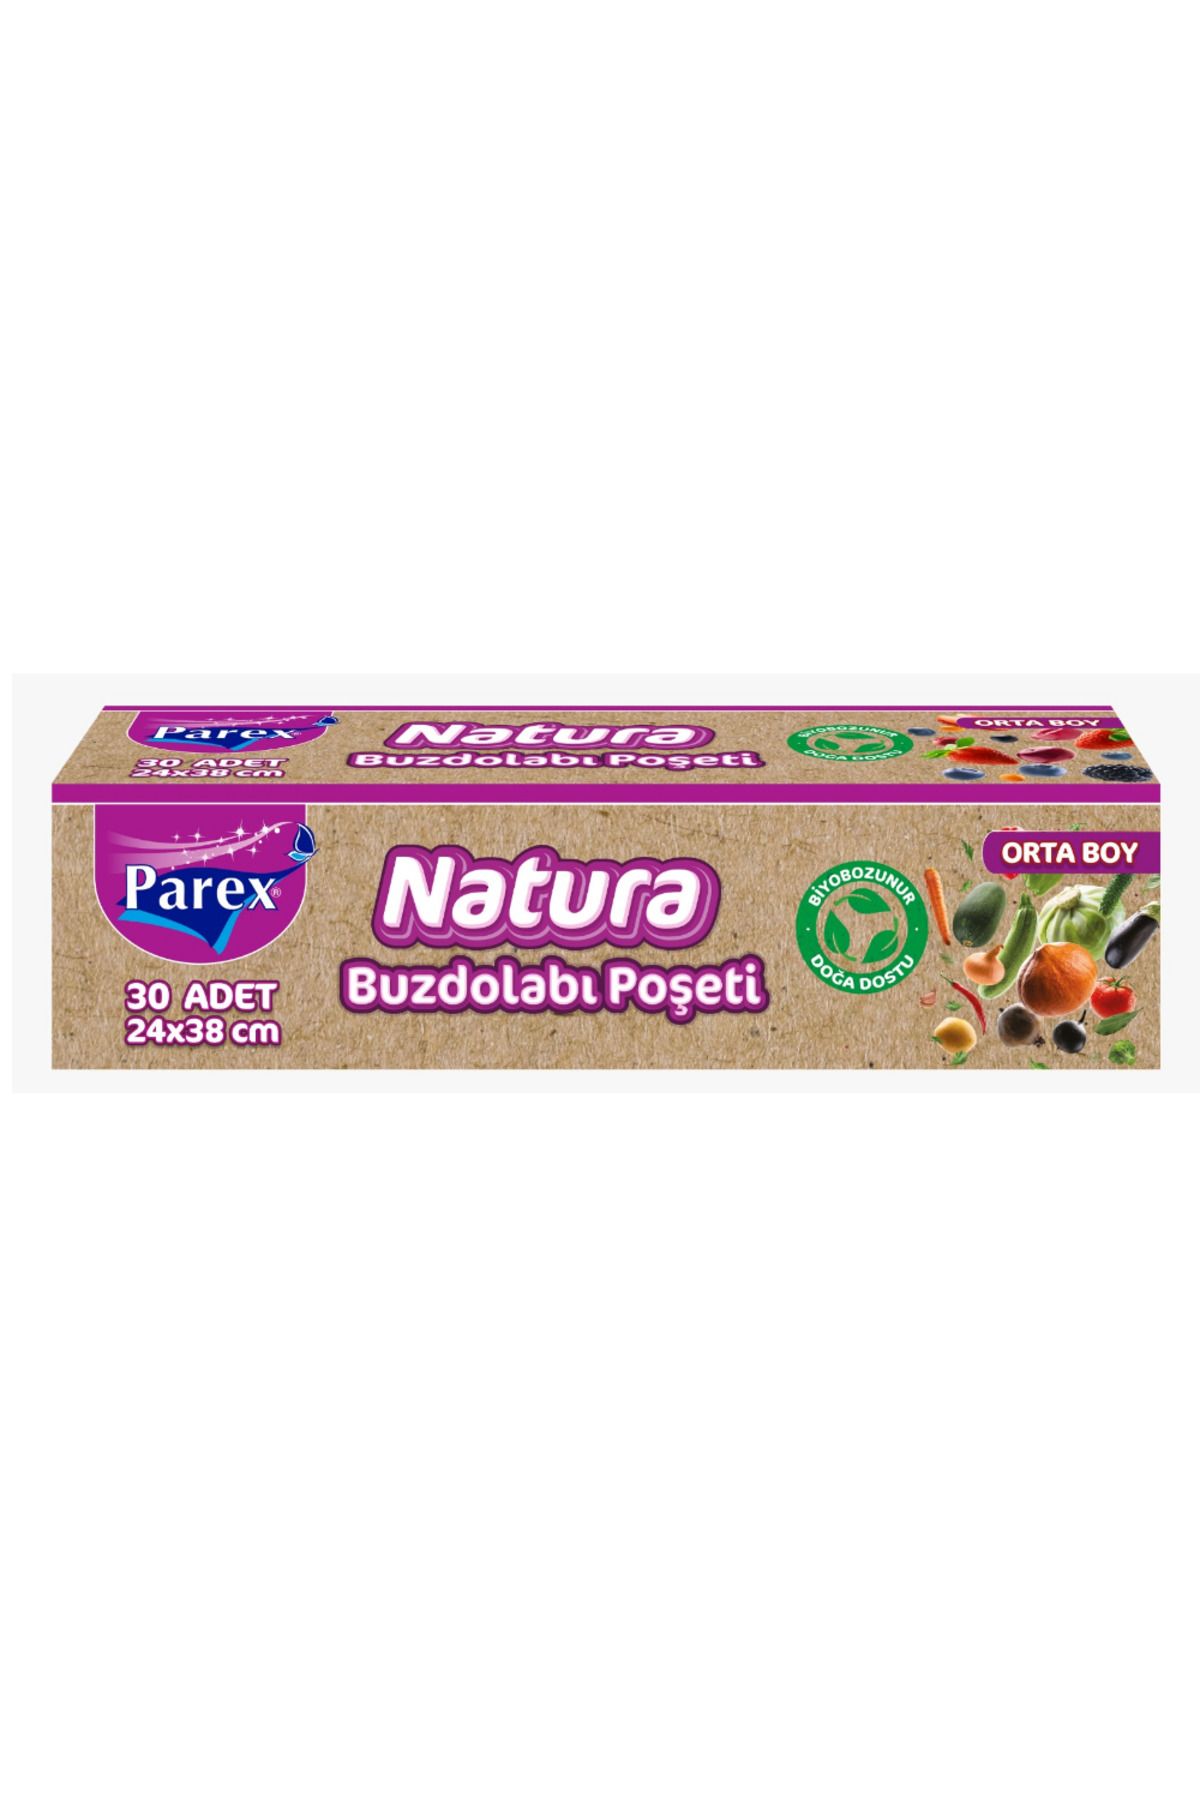 Parex Natura Buzdolabı Poşeti Orta Boy 30'lu